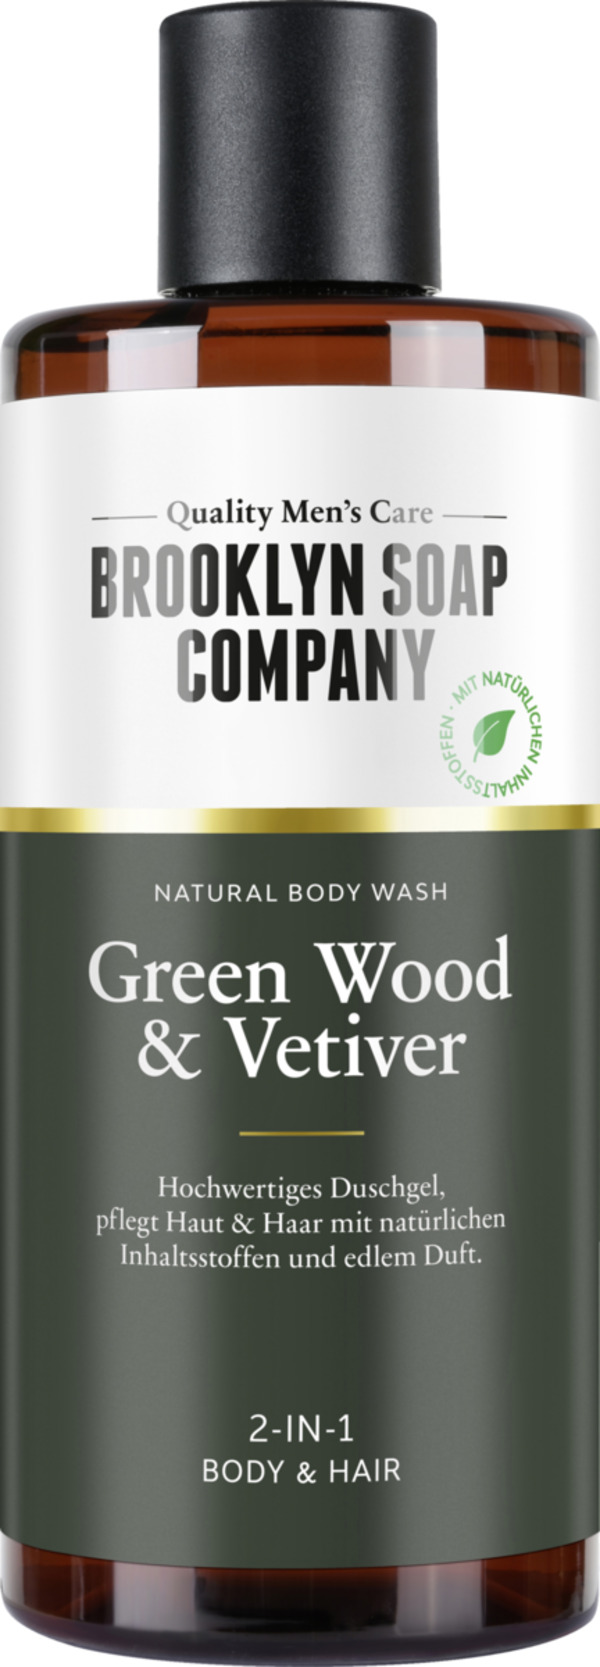 Bild 1 von Brooklyn Soap Company Body Wash Green Wood & Vetiver, 300 ml